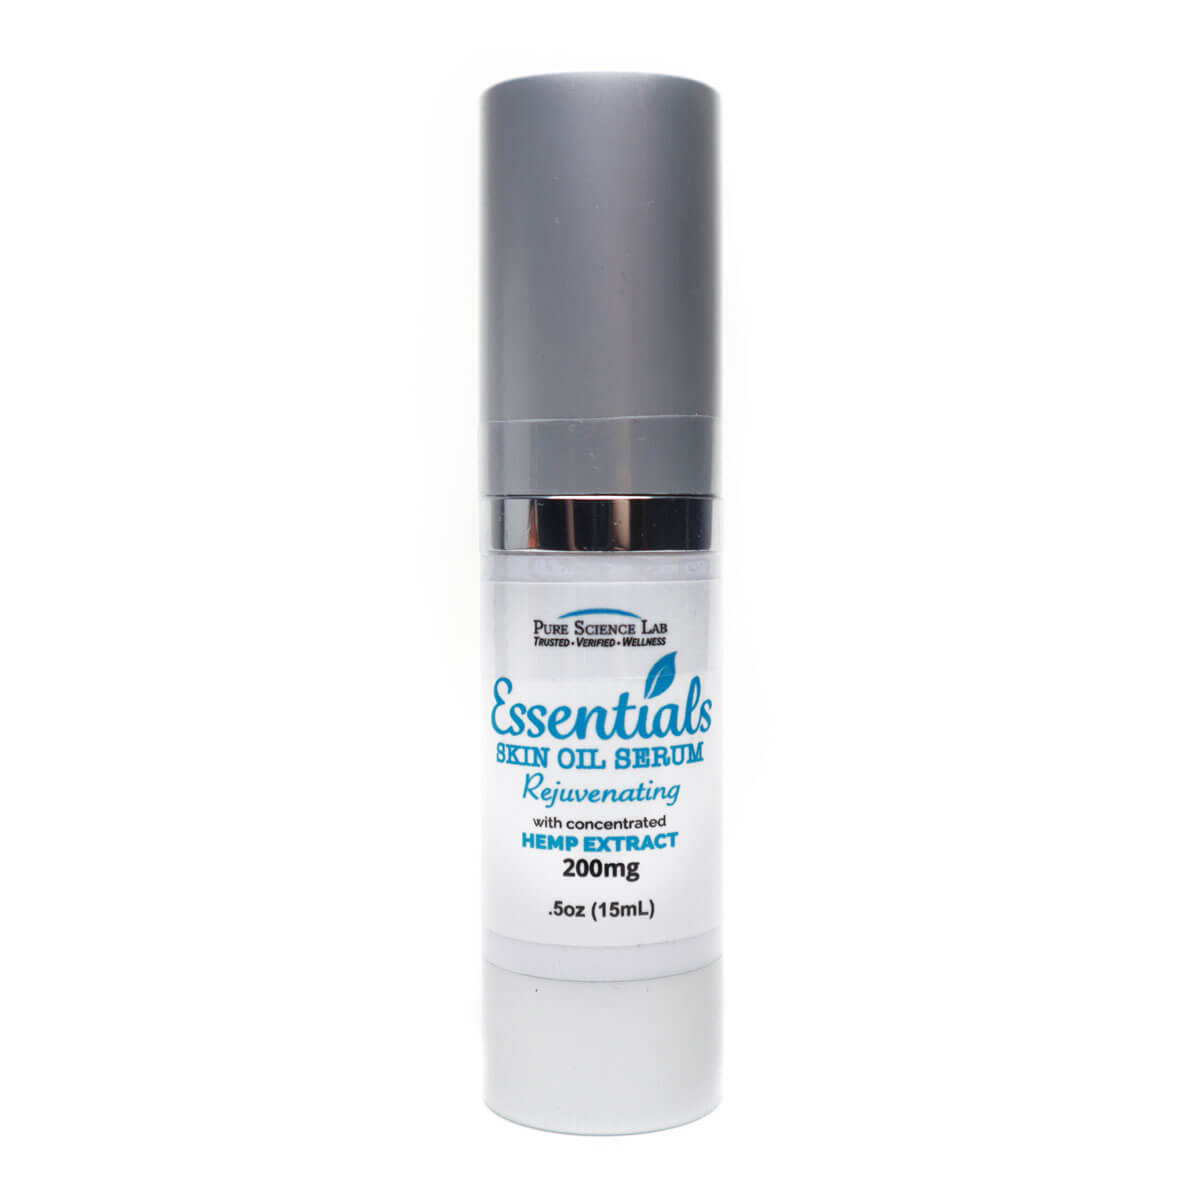 Argan Oil CBD Hemp Extract Softening Skin Serum Rejuvenating